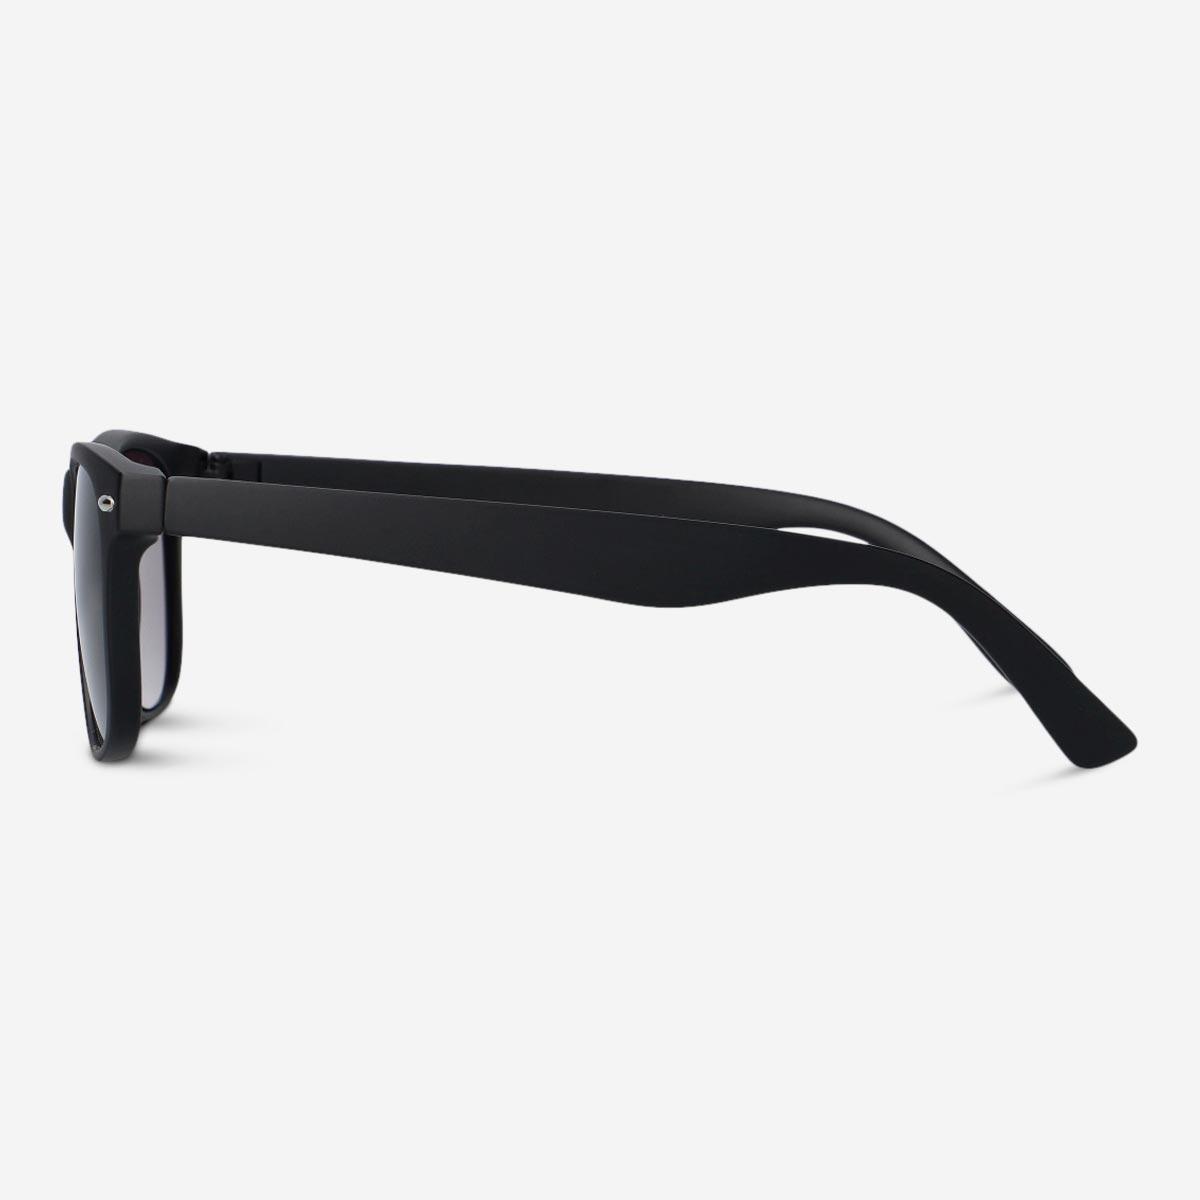 Black reading sunglasses. + 3.5